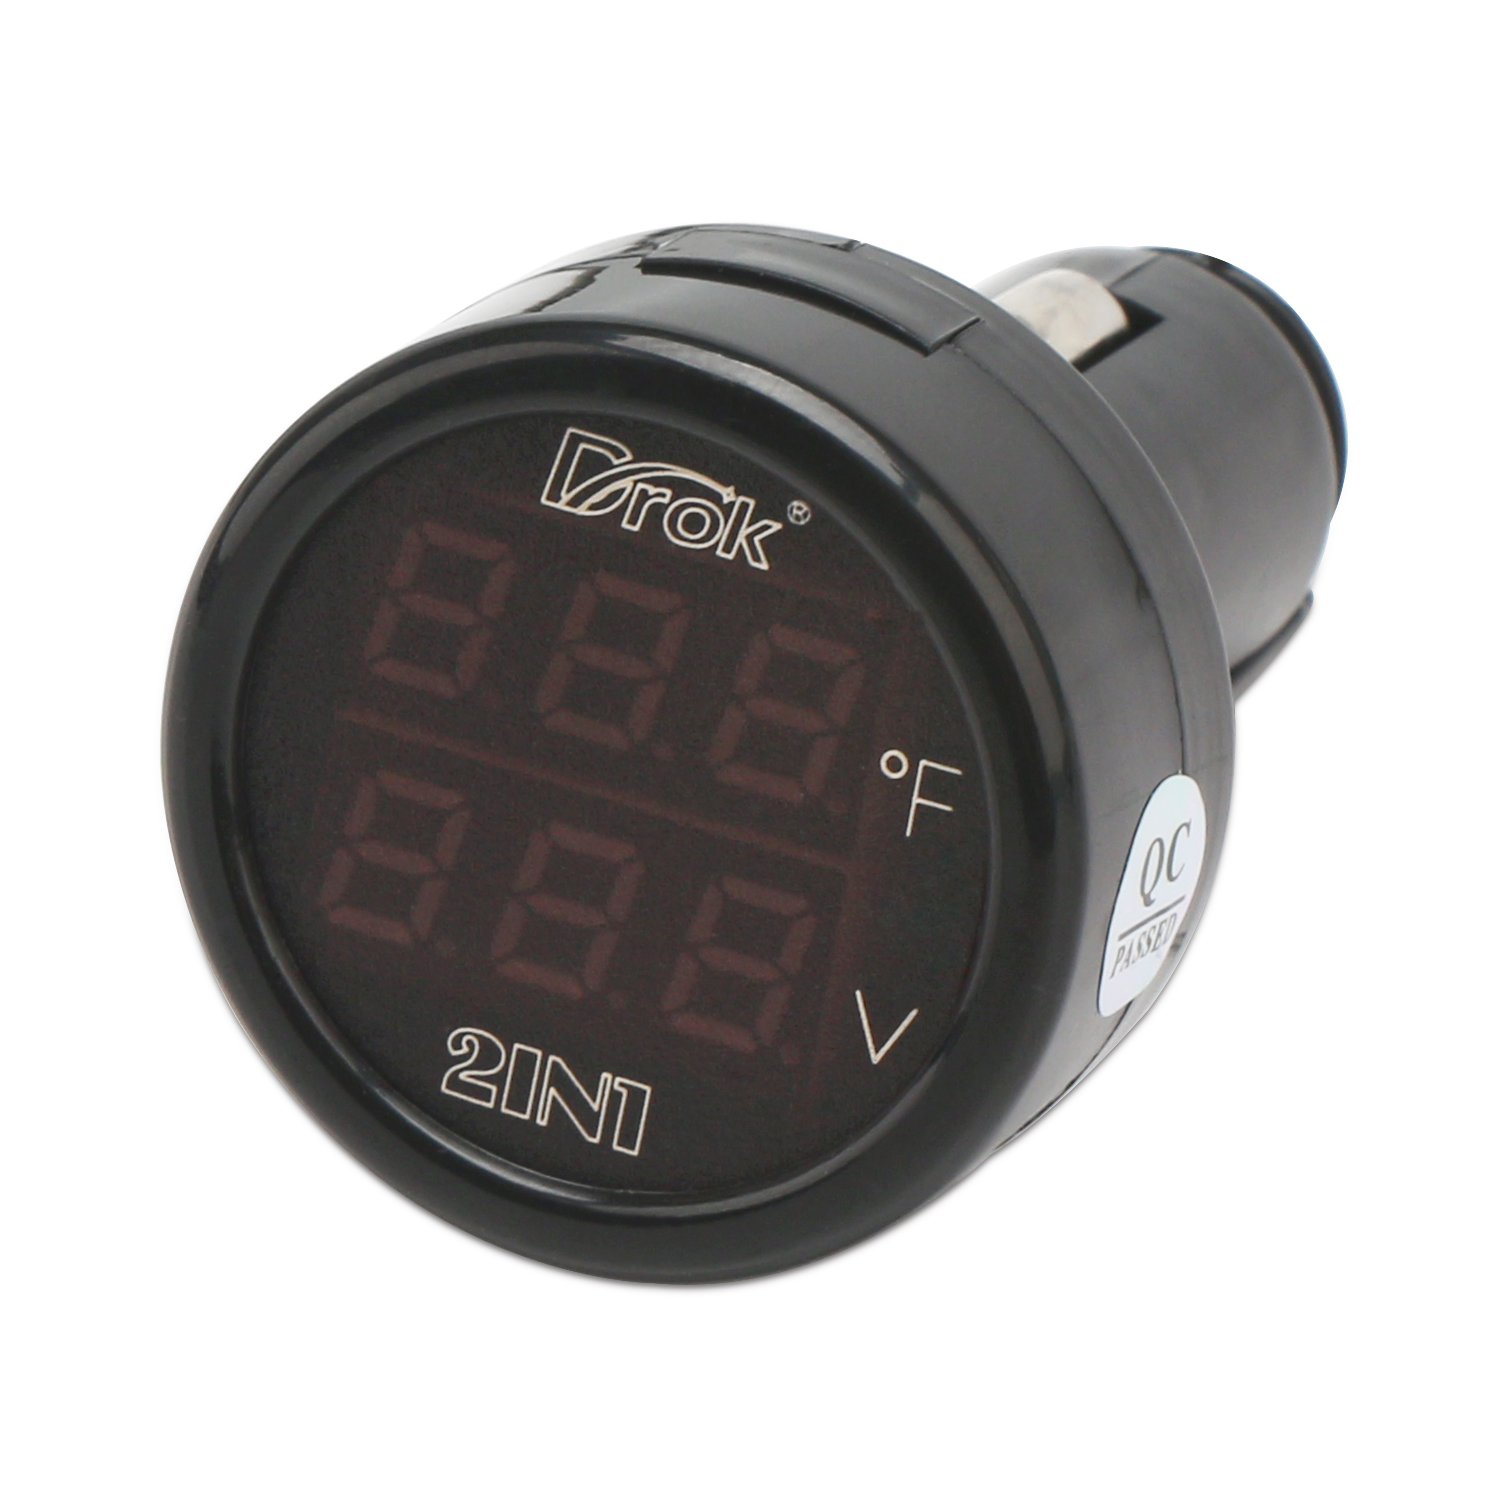 Yosoo 12V Car Digital Thermometer Voltmeter Clock Alarm Monitor, Multifunctional Auto Meter Clock Voltage Freezing Temperature Gauge, Clock LCD